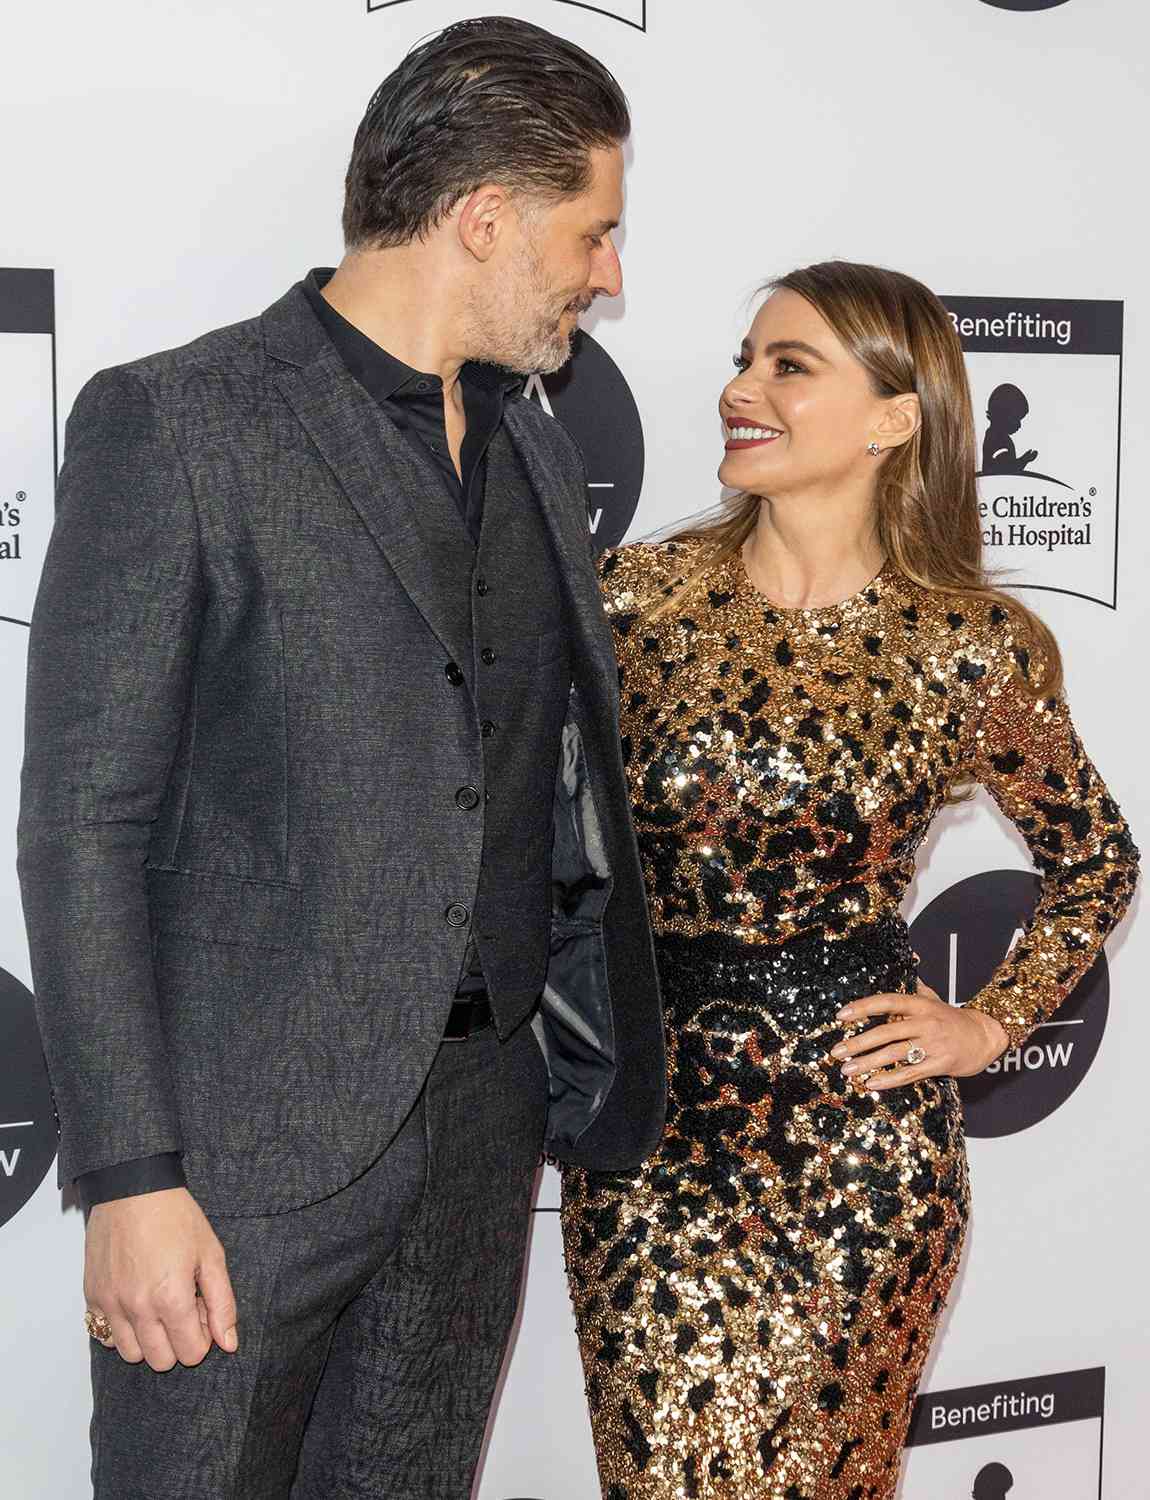 Sofia Vergara and Joe Manganiello attend the VIP Opening Night premiere of the 2020 LA Art Show at Convention Centre in Los Angeles, California, USA, on 06 February 2020.